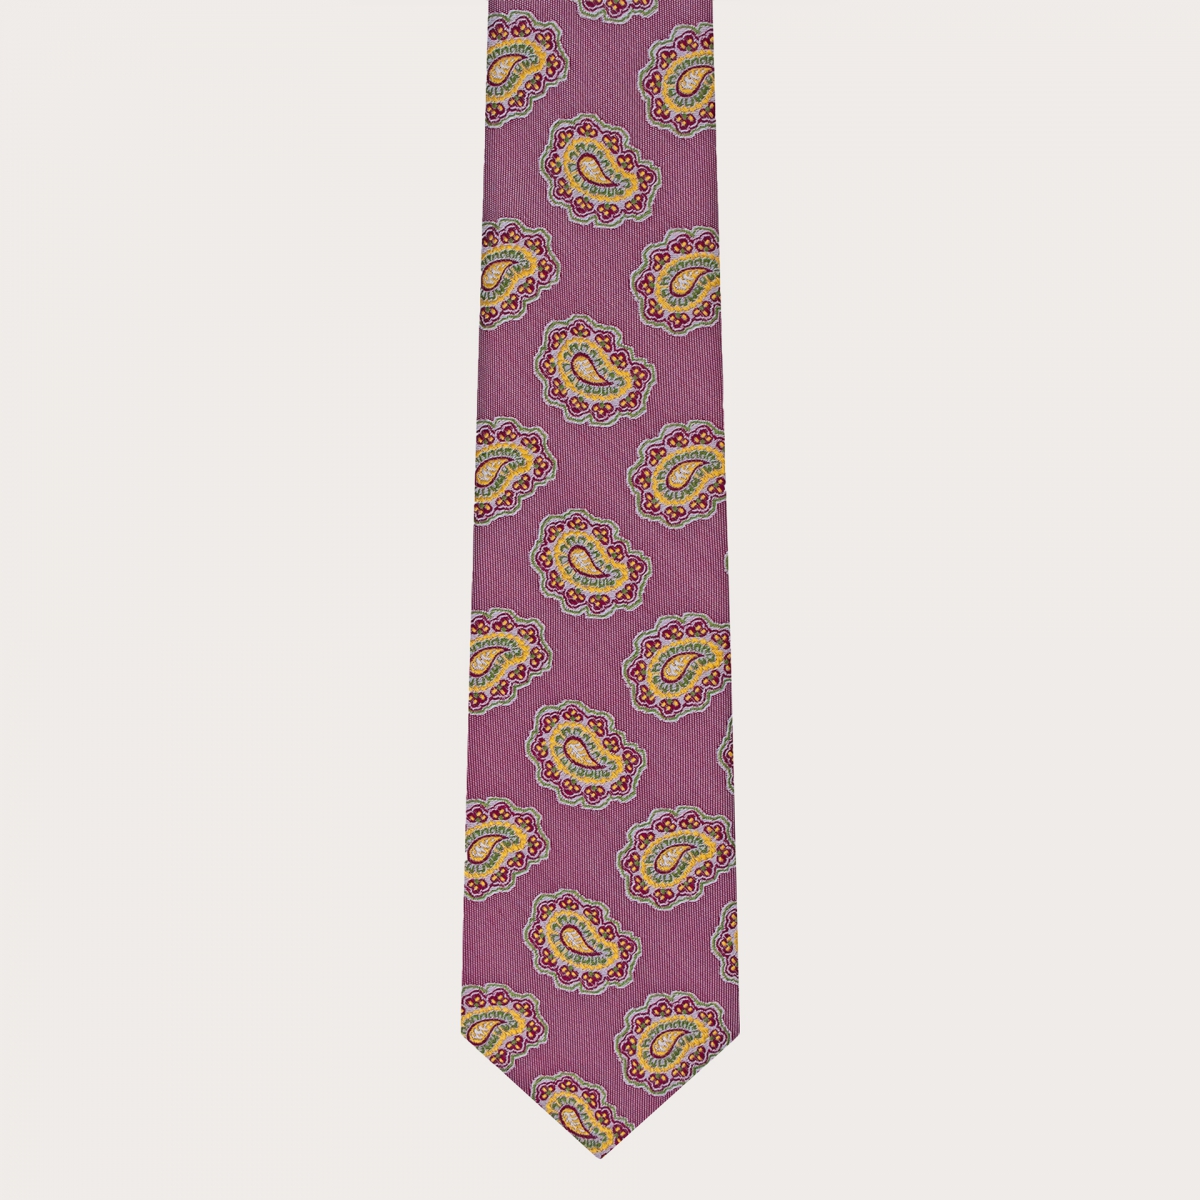 Bretelle e cravatta coordinate in seta, fantasia paisley tortora